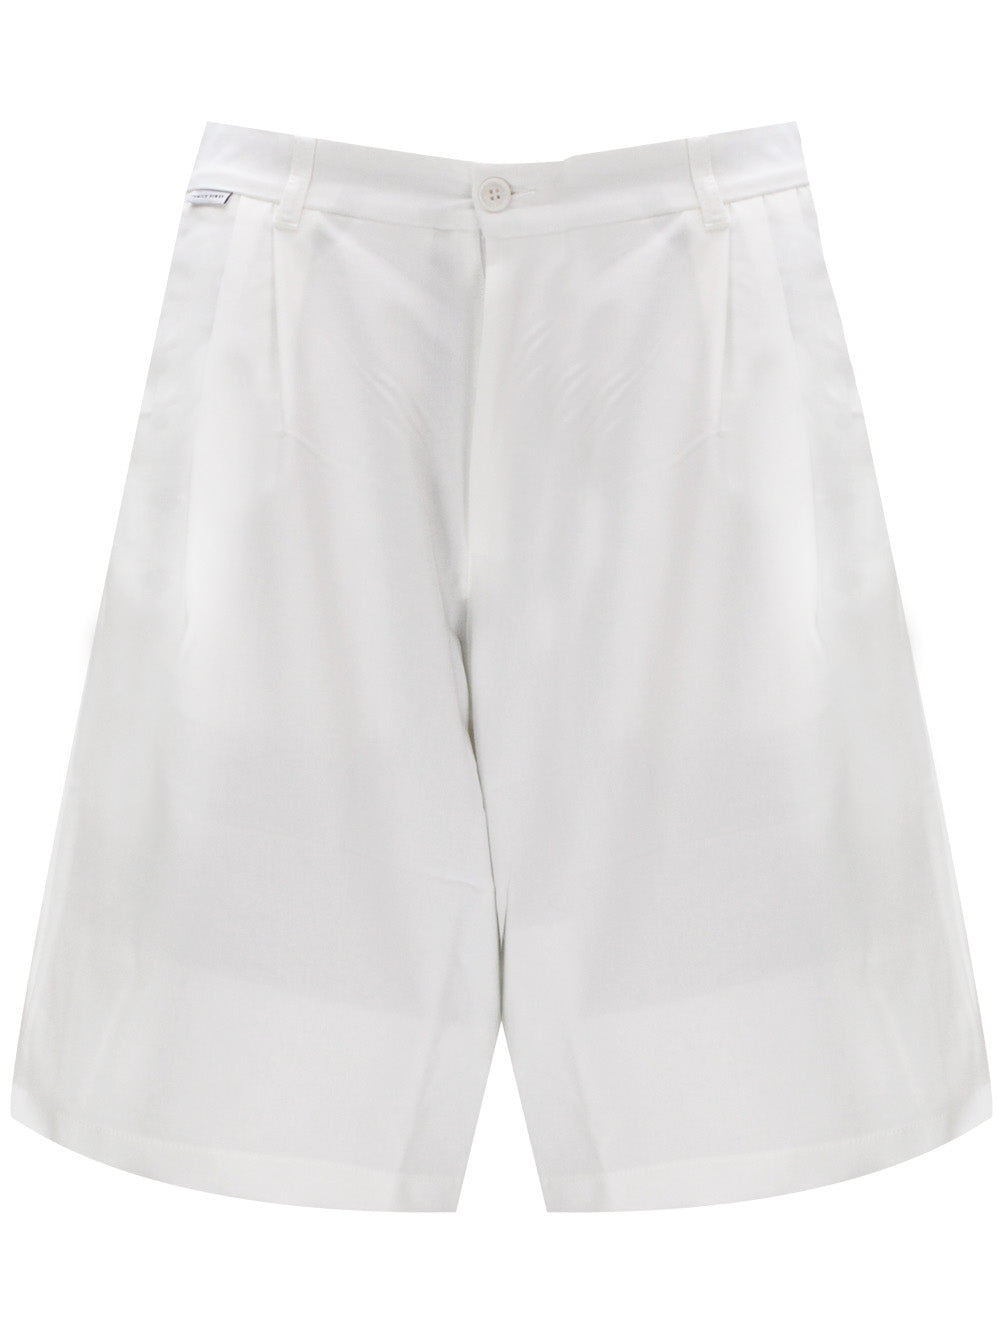 Family First PSS2402 Man White Shorts - Zuklat